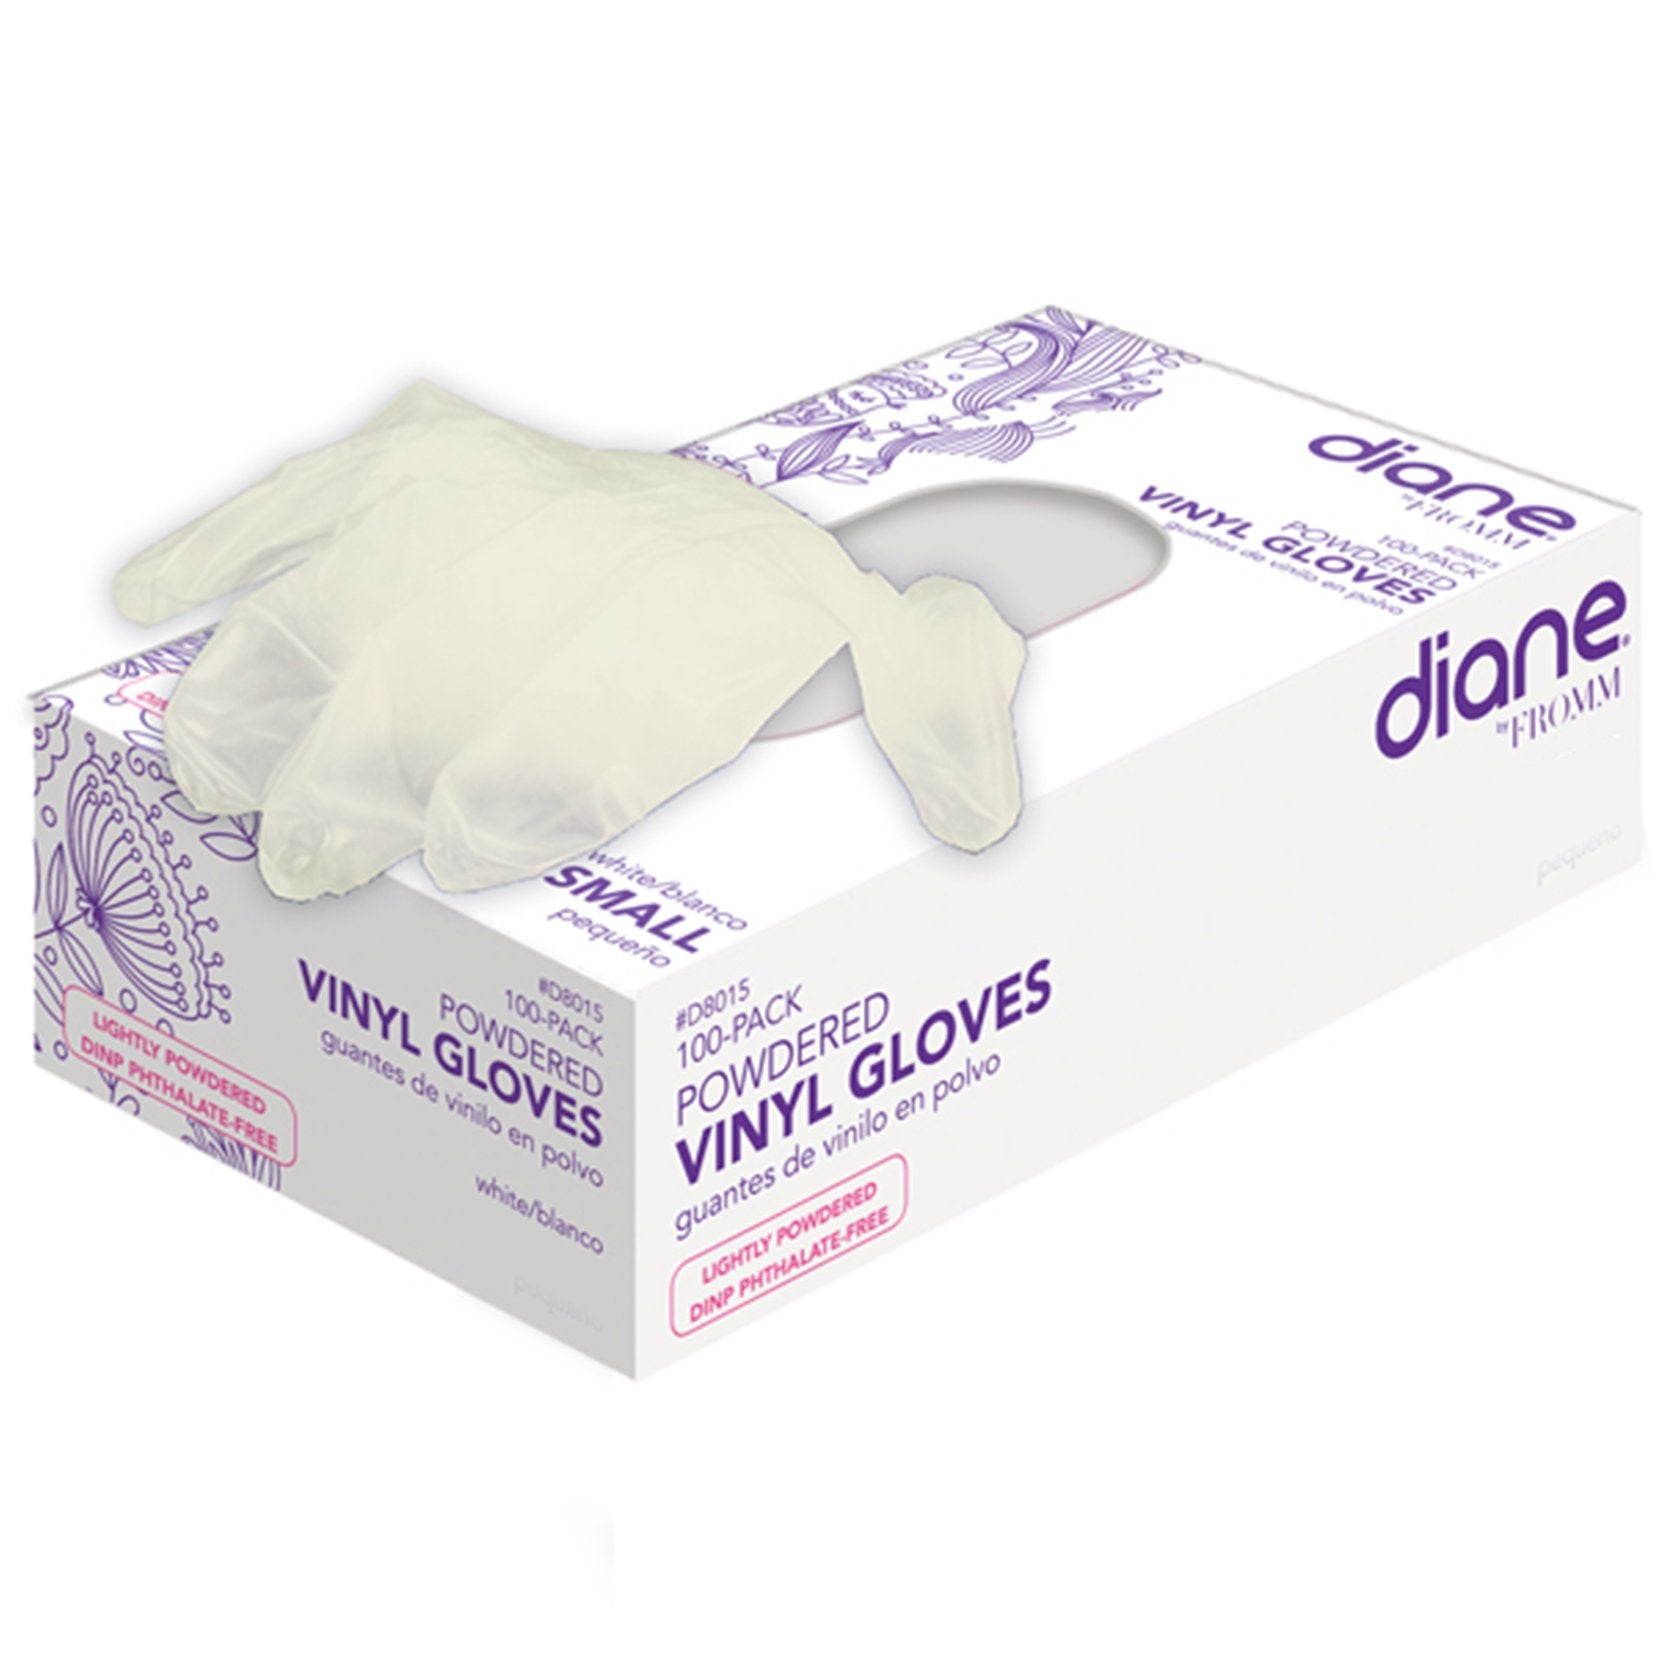 Diane Vinyl Gloves Powdered 100pk